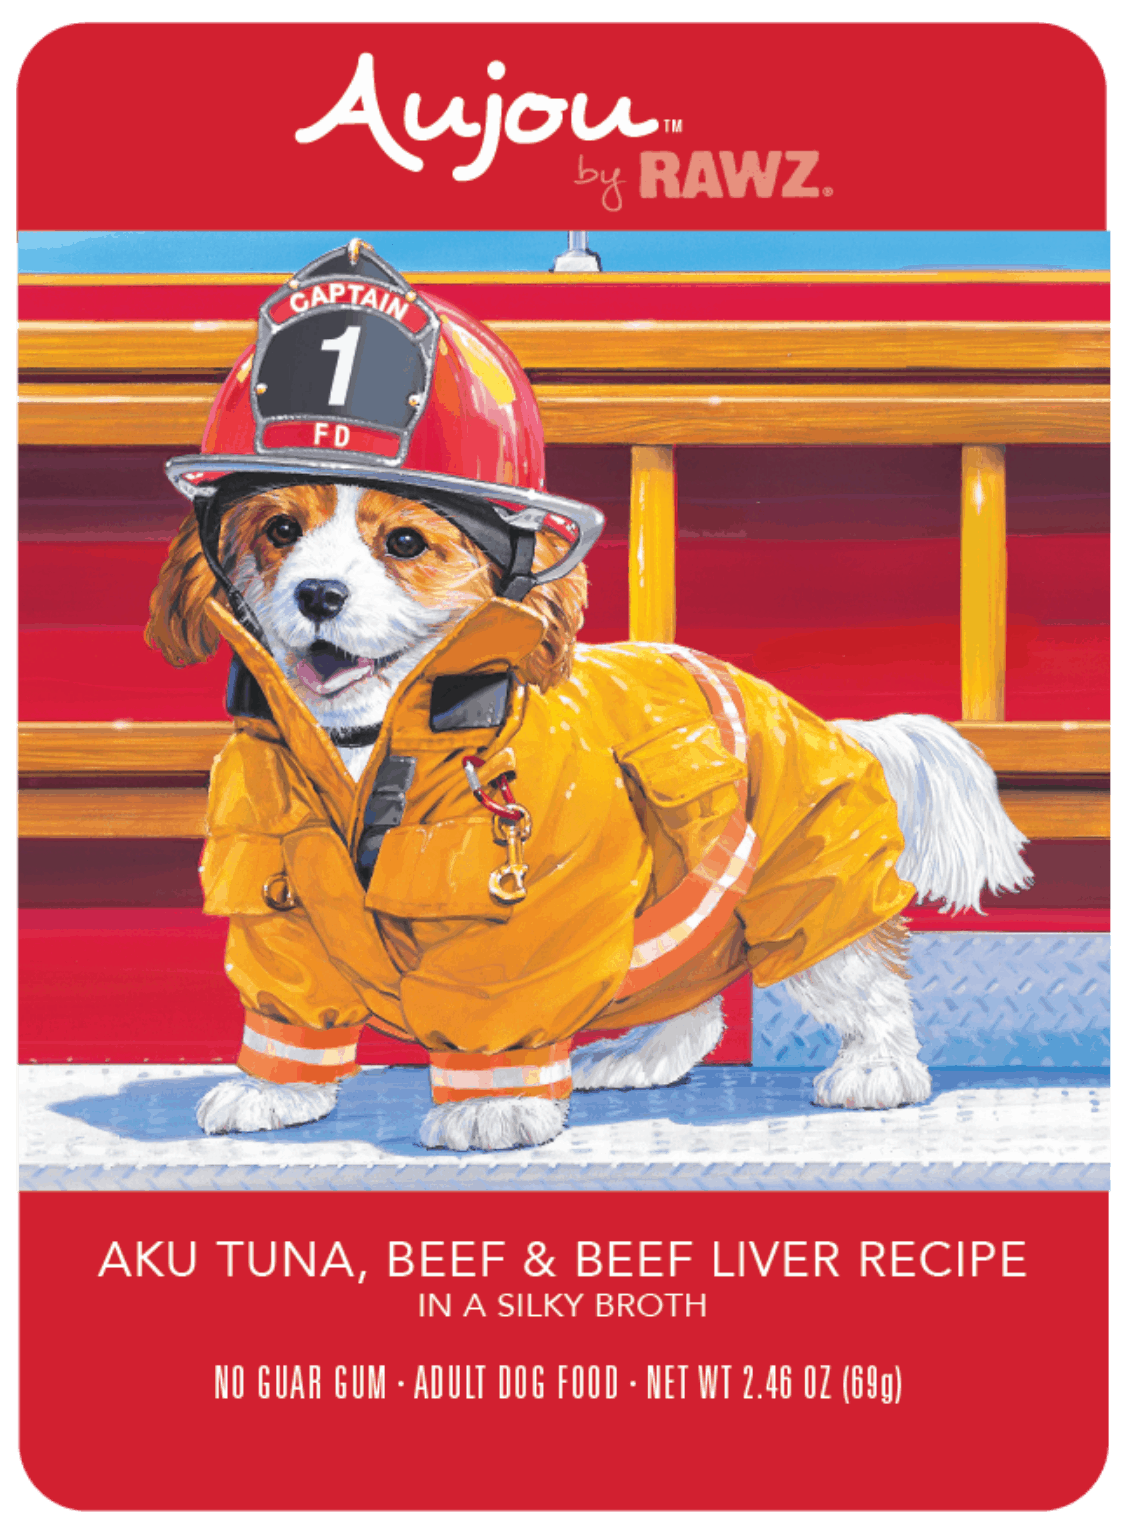 RAWZ AUJOU AKU TUNA, BEEF & BEEF LIVER DOG FOOD RECIPE